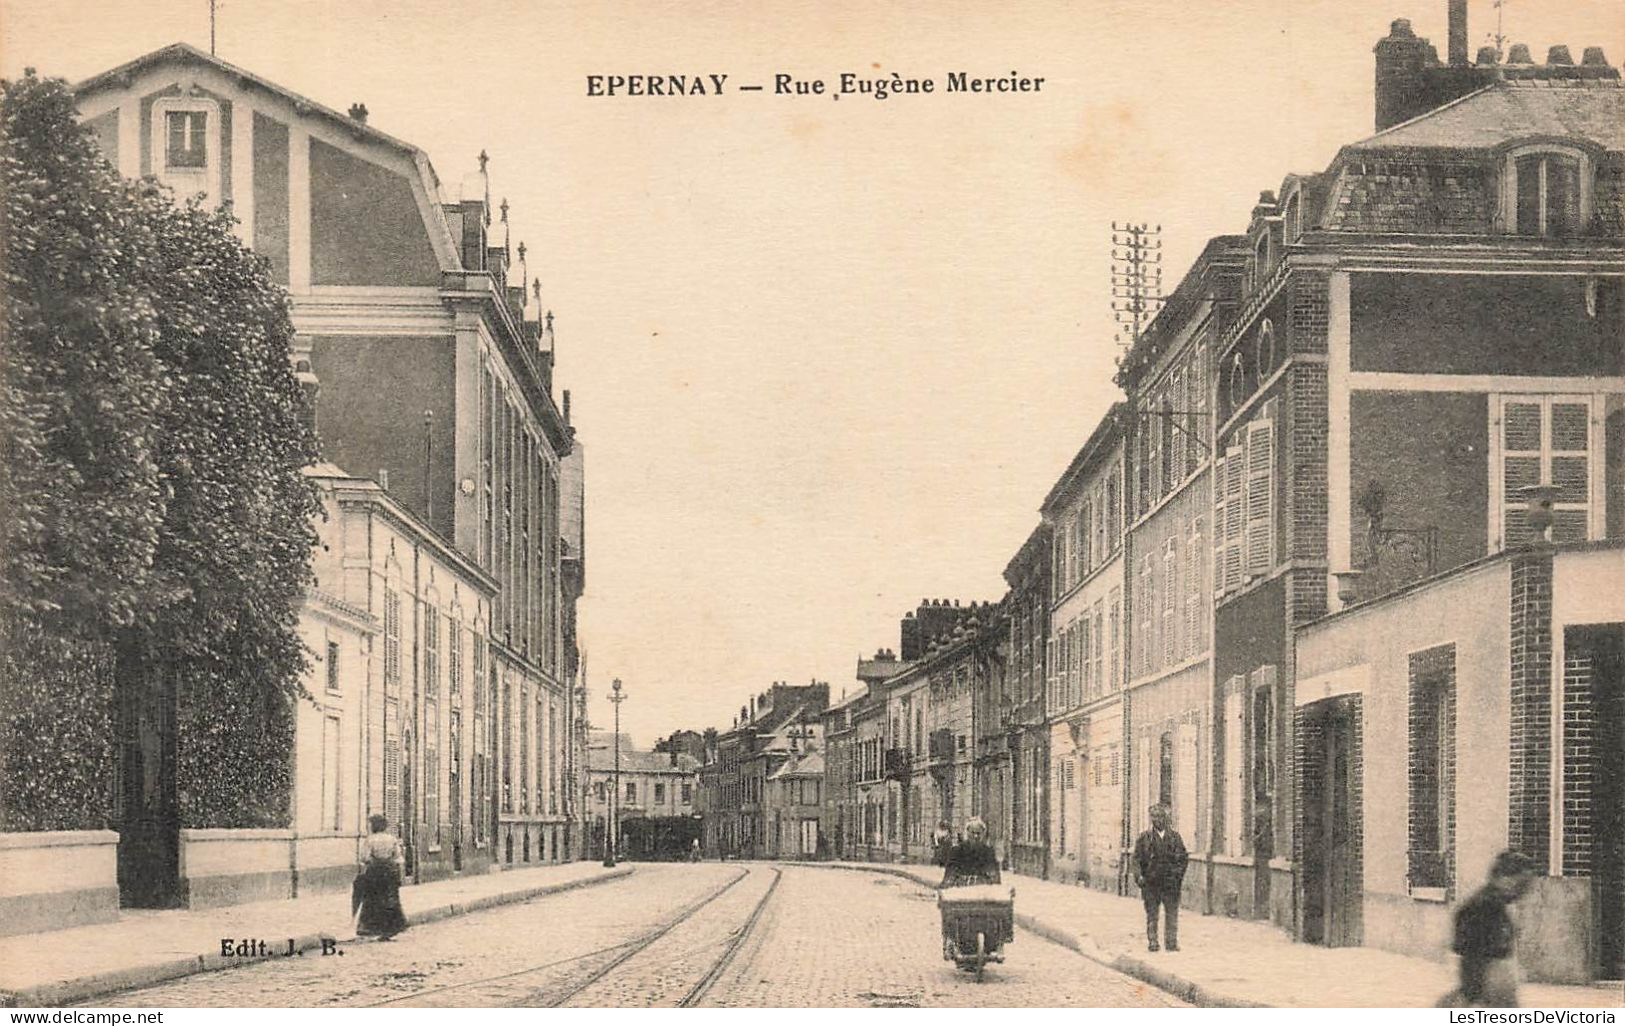 FRANCE - Epernay - Rue Eugène Mercier - Edit JB - Rails - Civils Marchant Dans La Rue - Carte Postale Ancienne - Epernay